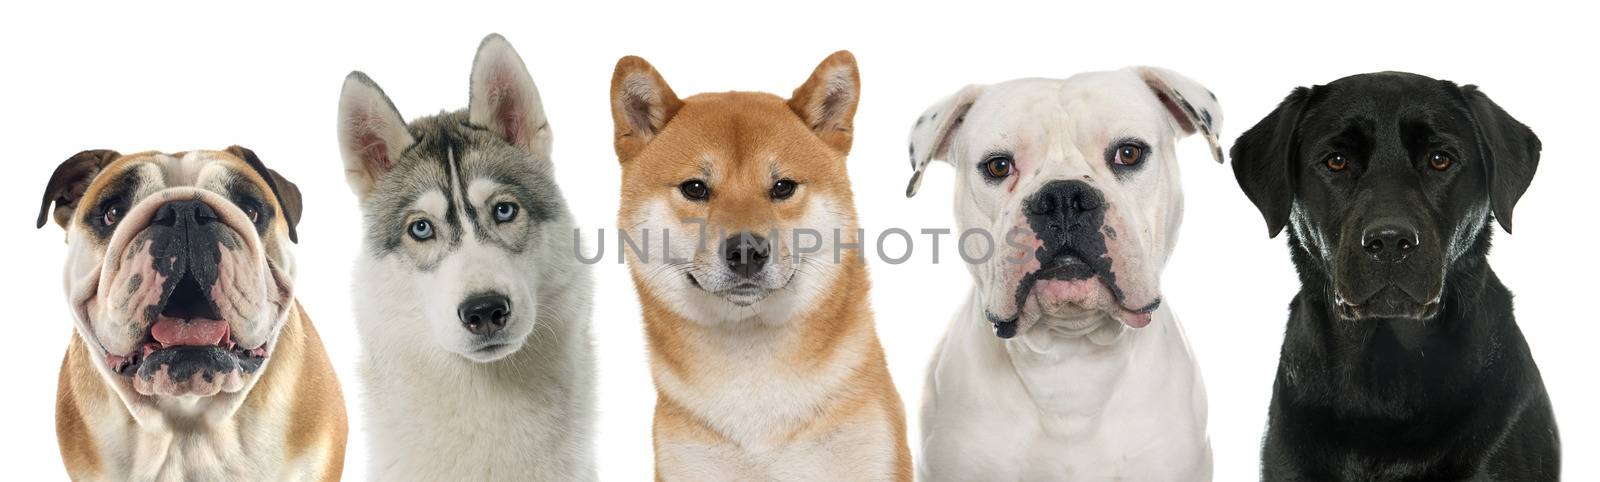 five purebred dogs by cynoclub